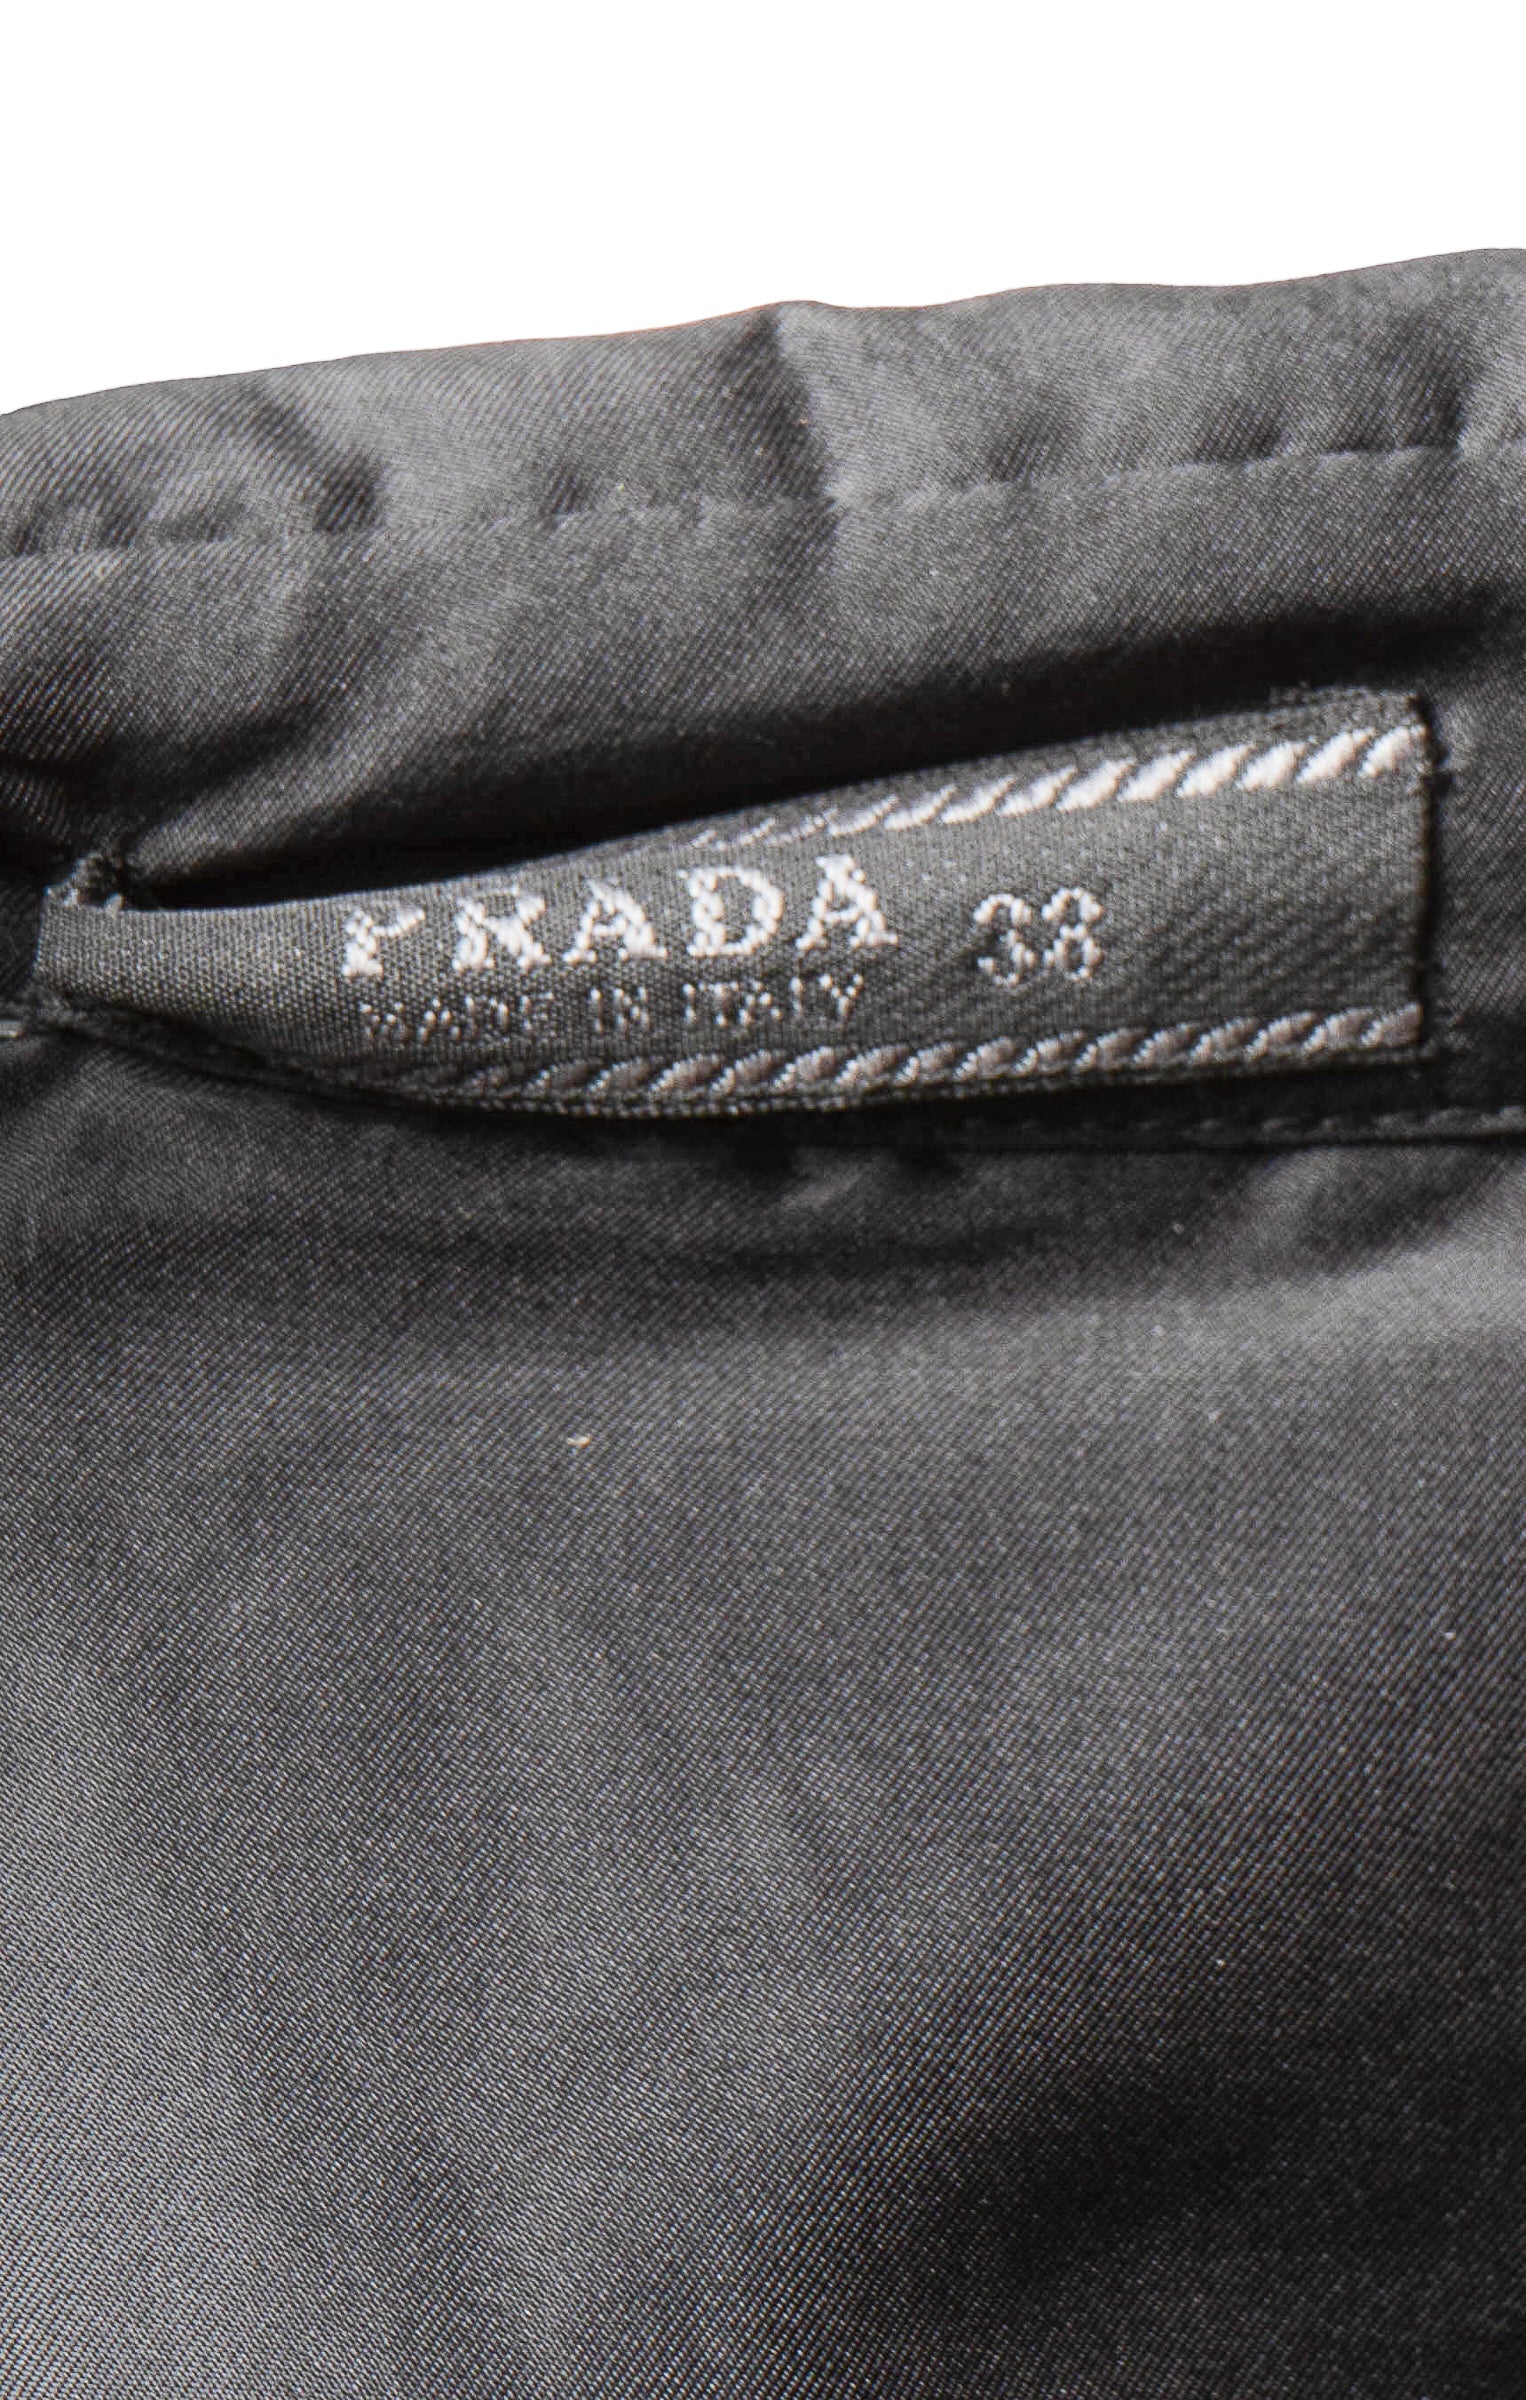 VINTAGE PRADA (RARE) Vest / Top Size: IT 38 / Comparable to US 0